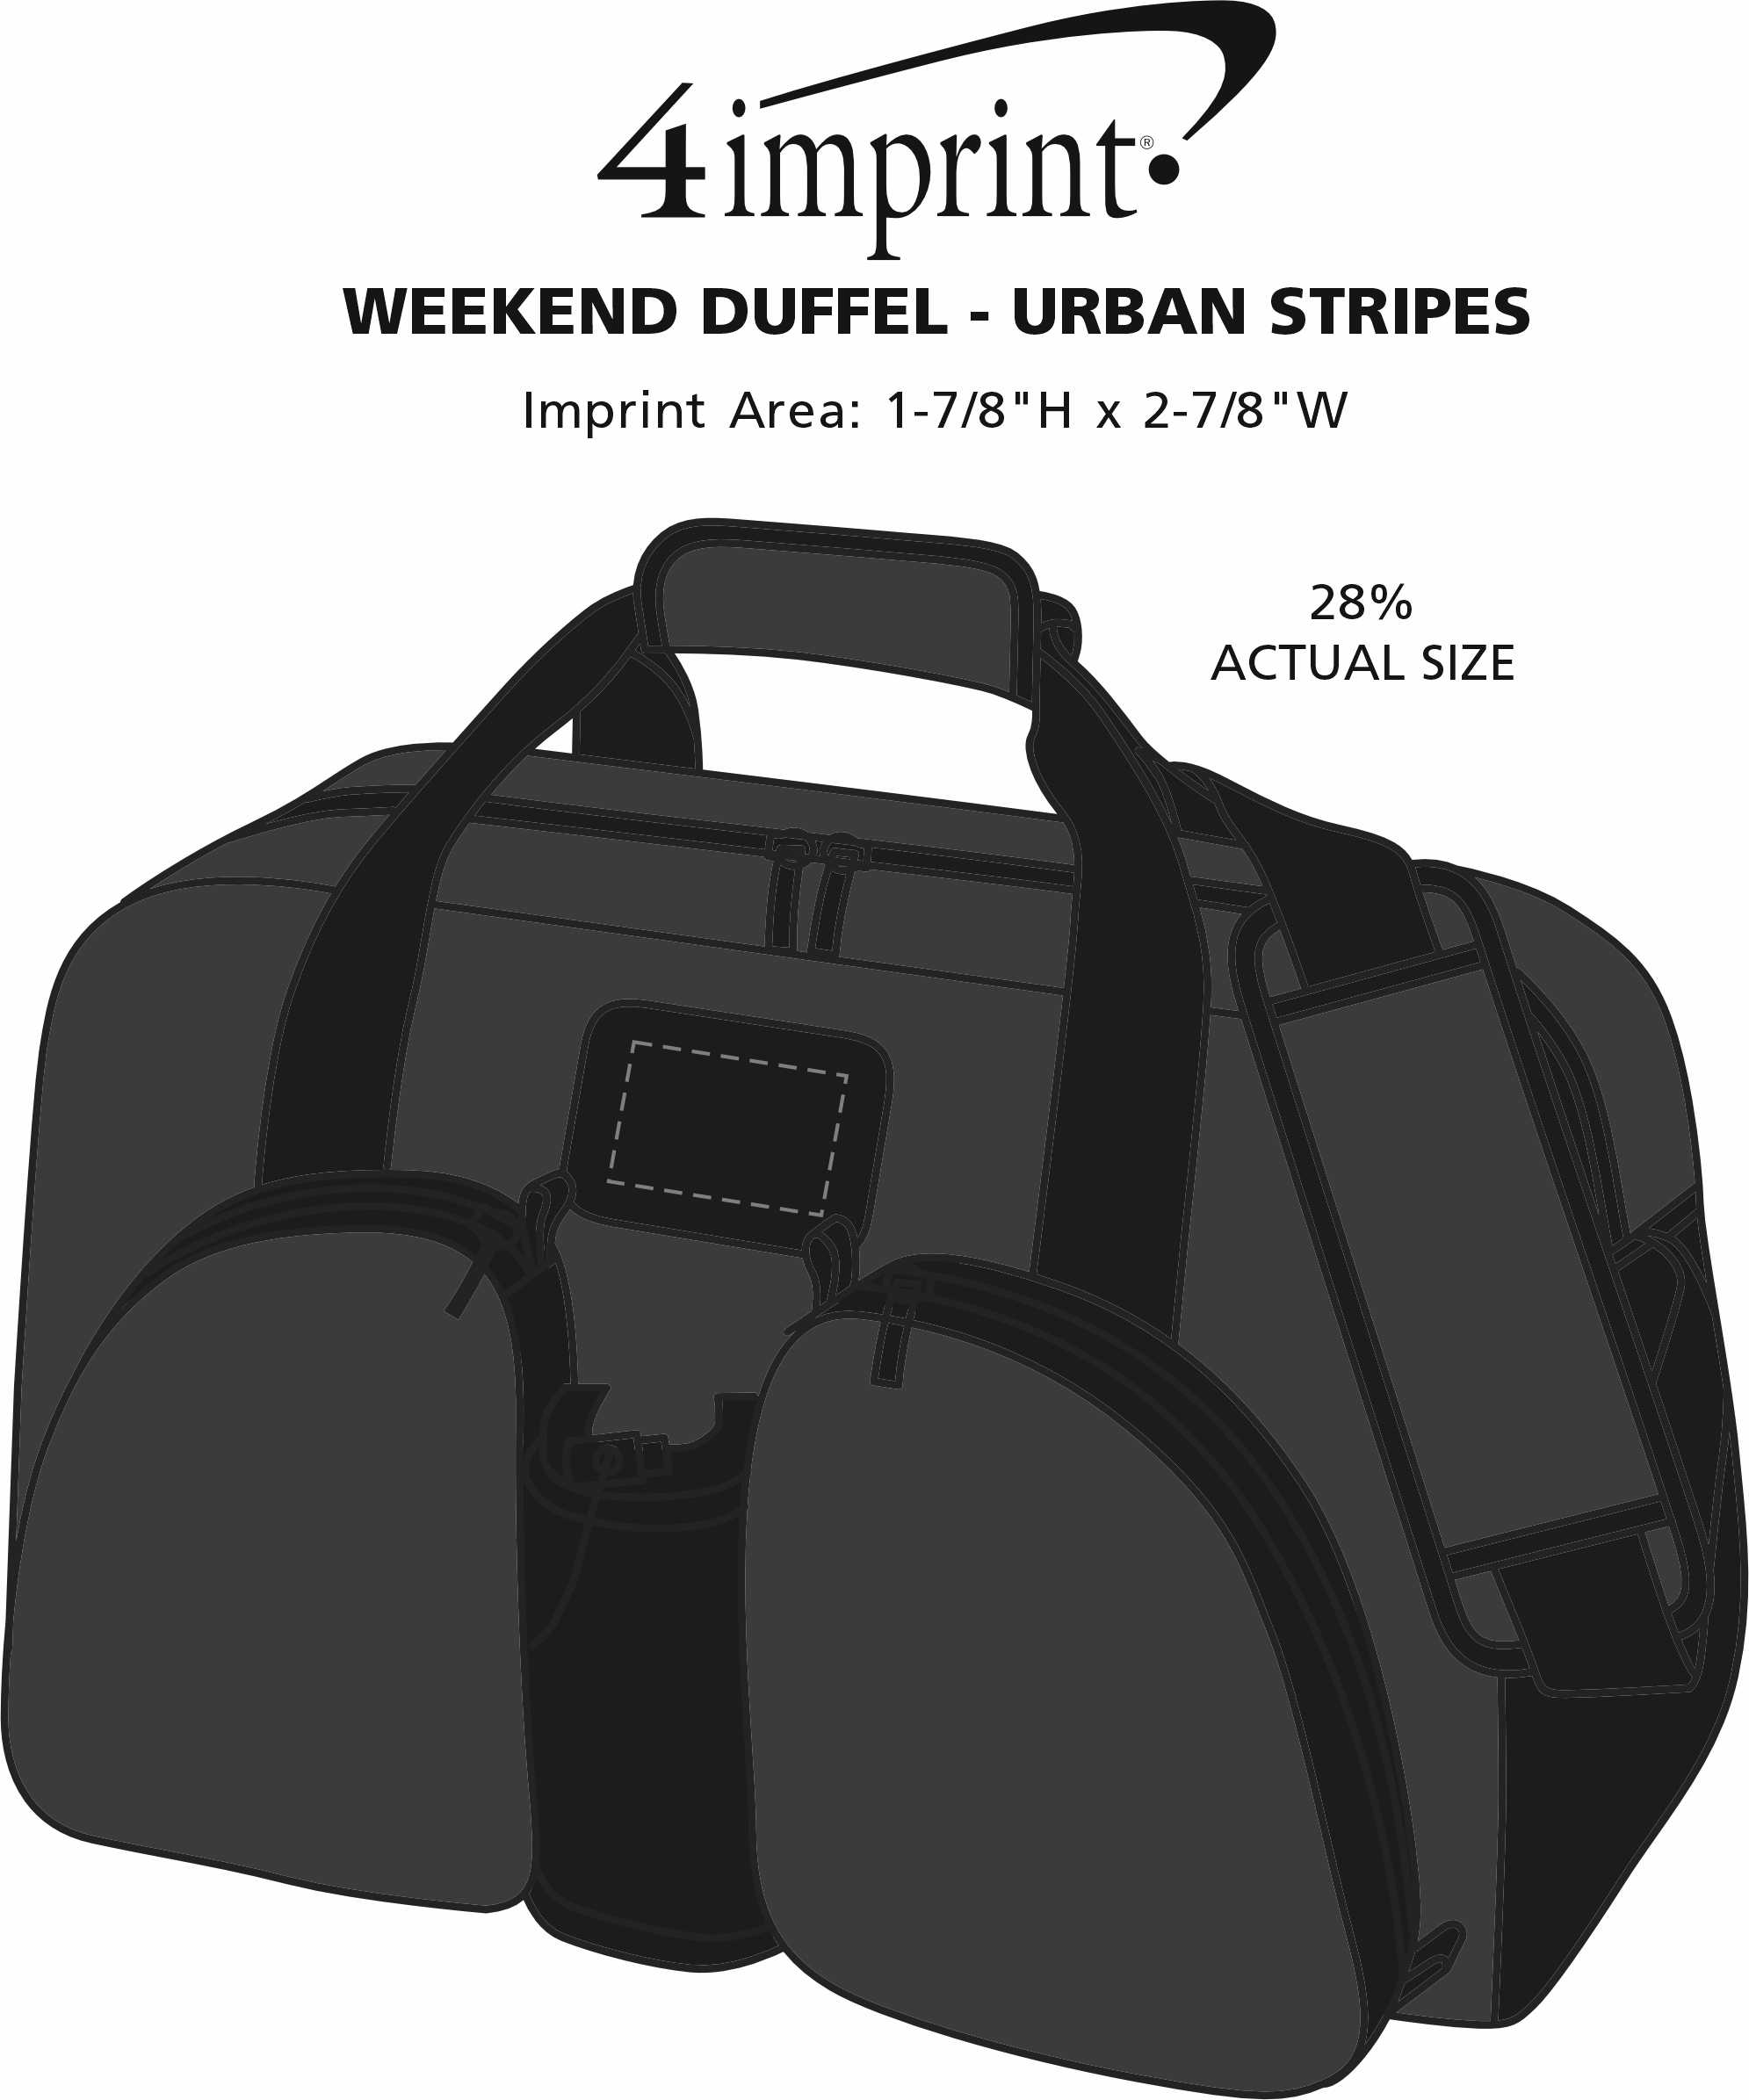 Imprint Area of Weekend Duffel - Urban Stripes